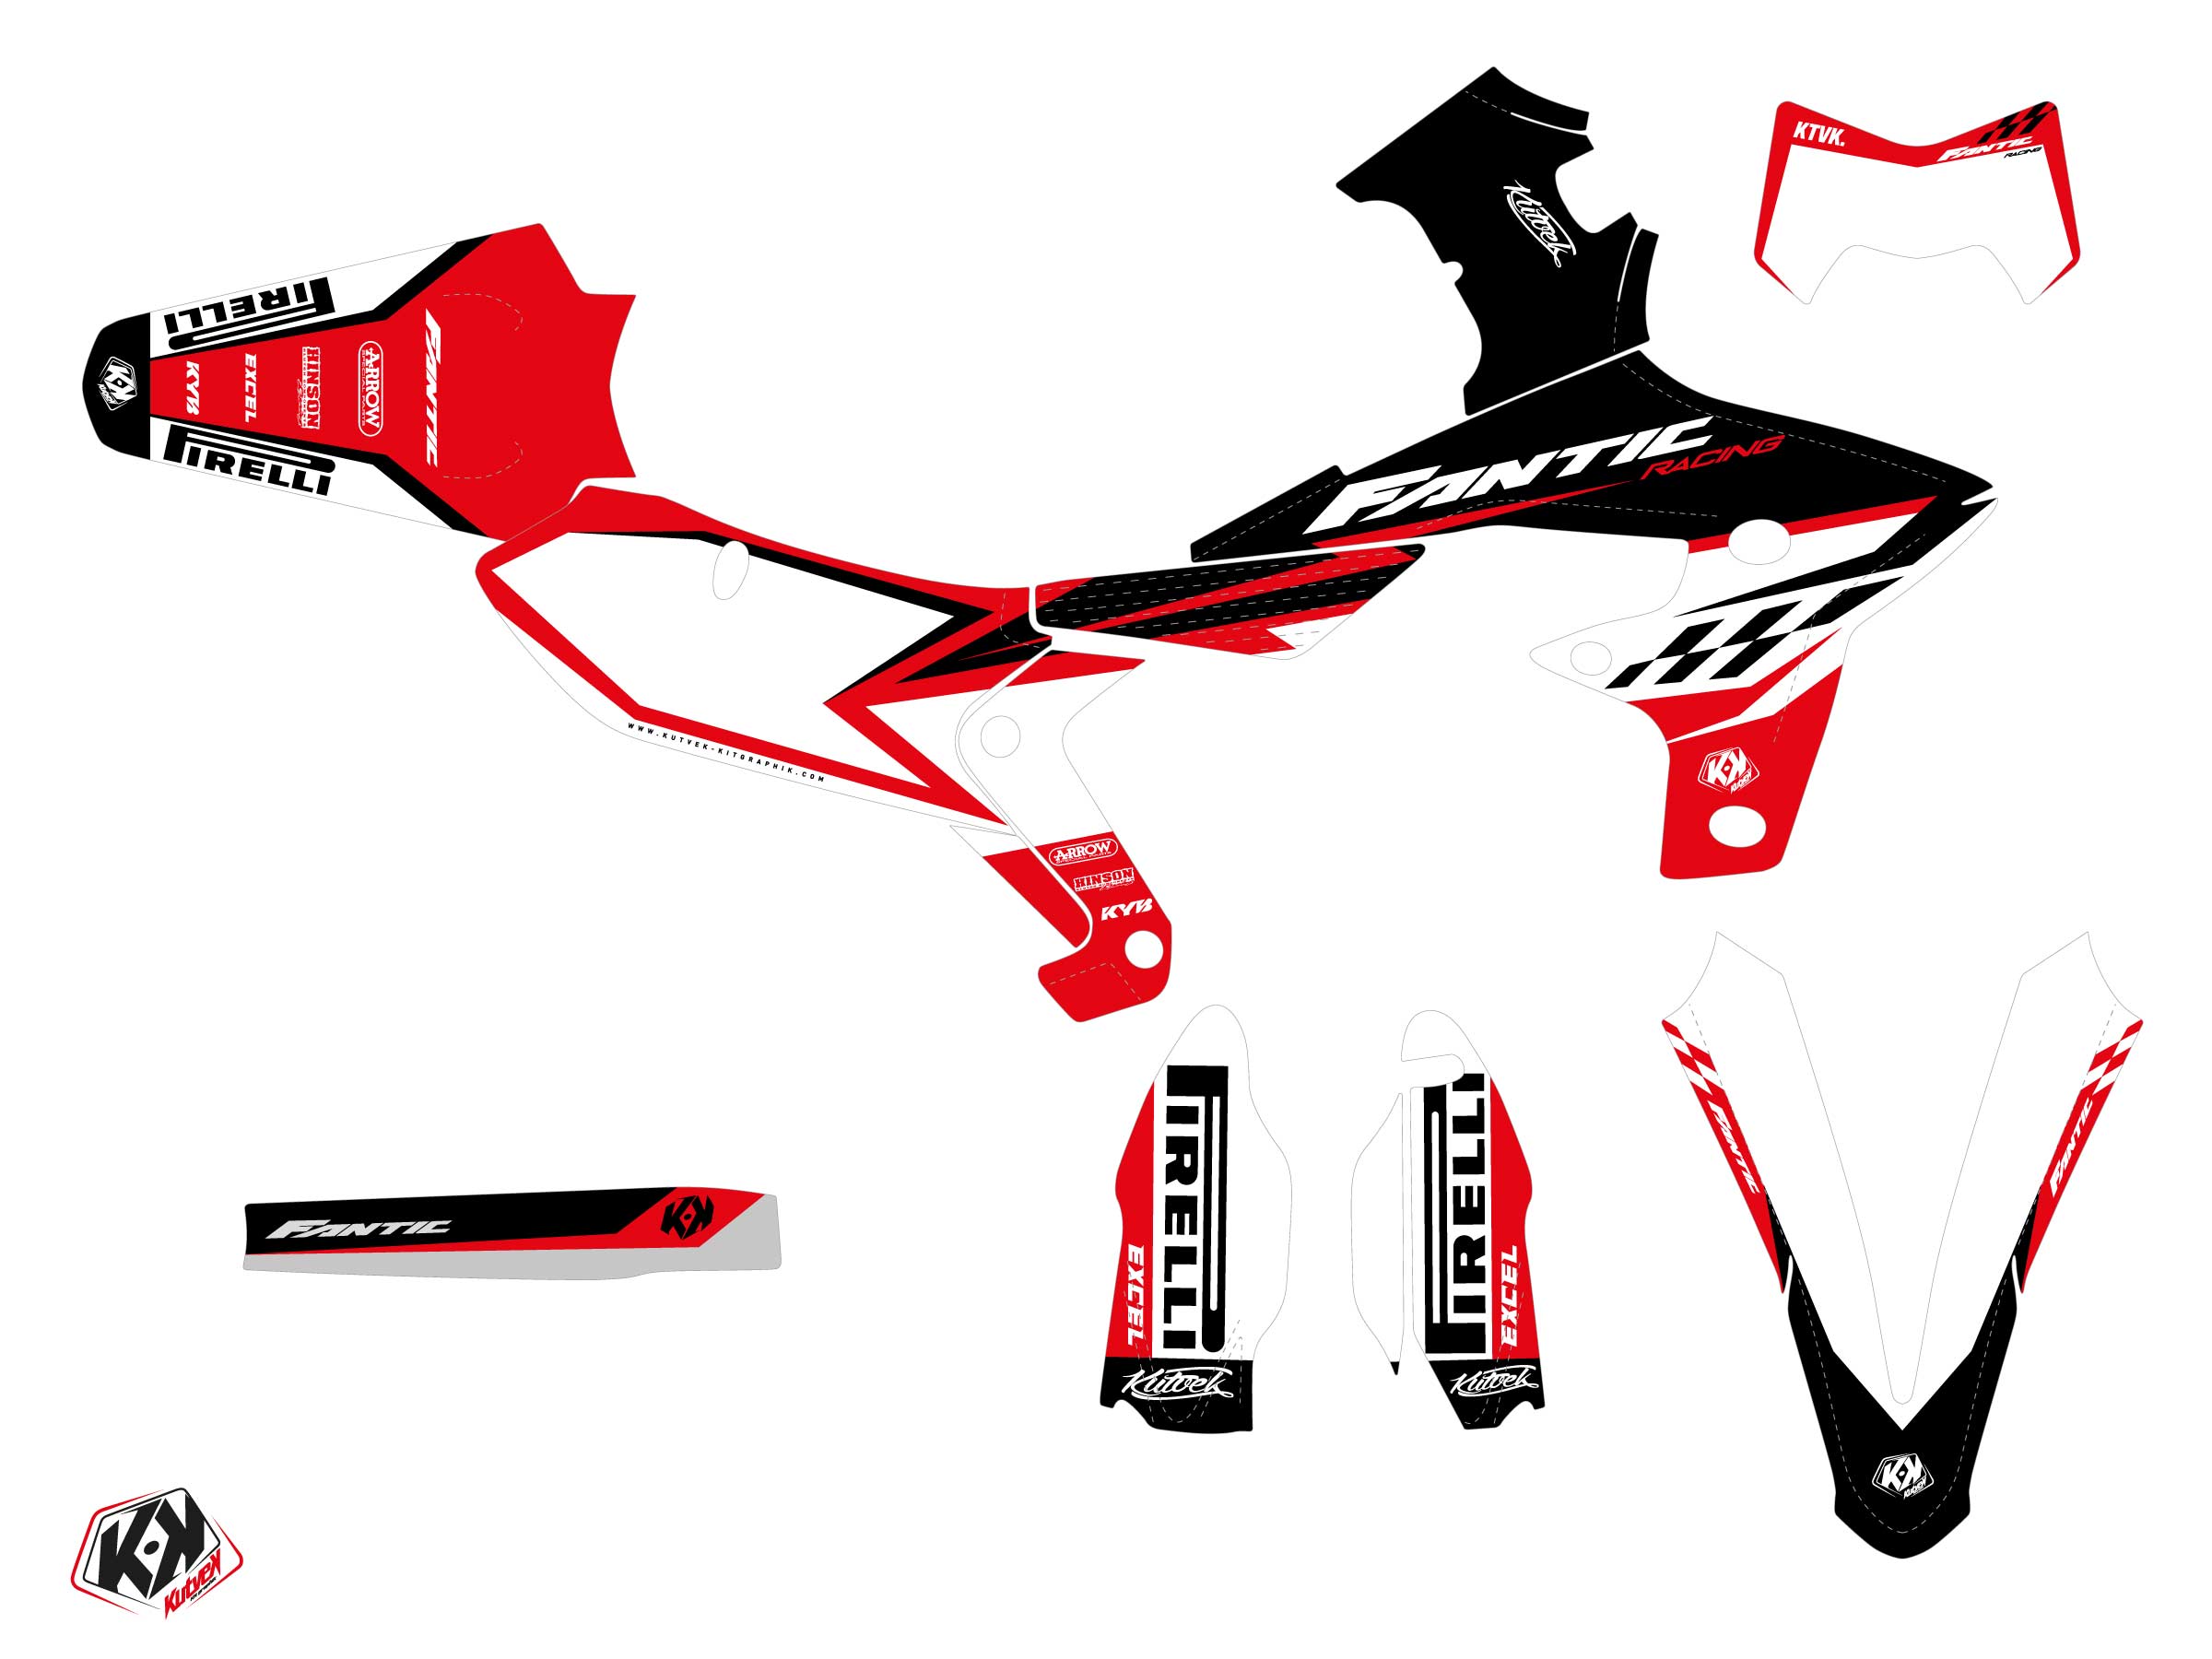 Fantic Xef 250 Dirt Bike Inkline Graphic Kit Red